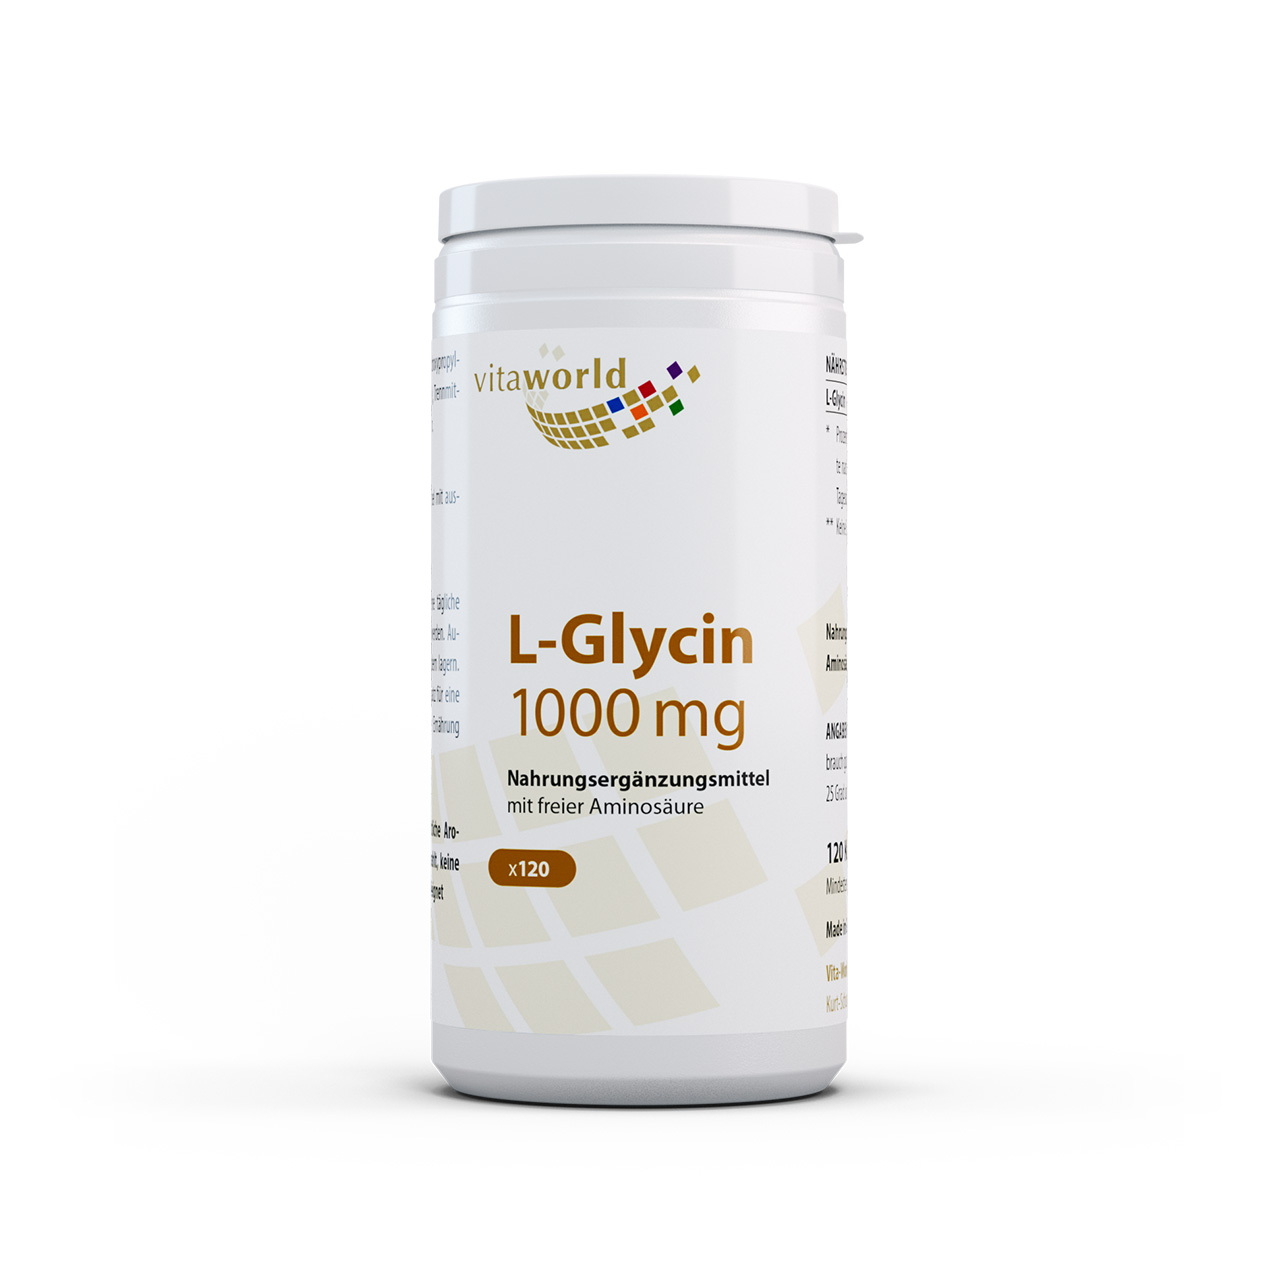 Vitaworld L-Glycin 1000 mg | 120 Kapseln | hochdosiert | vegan | gluten- und laktosefrei